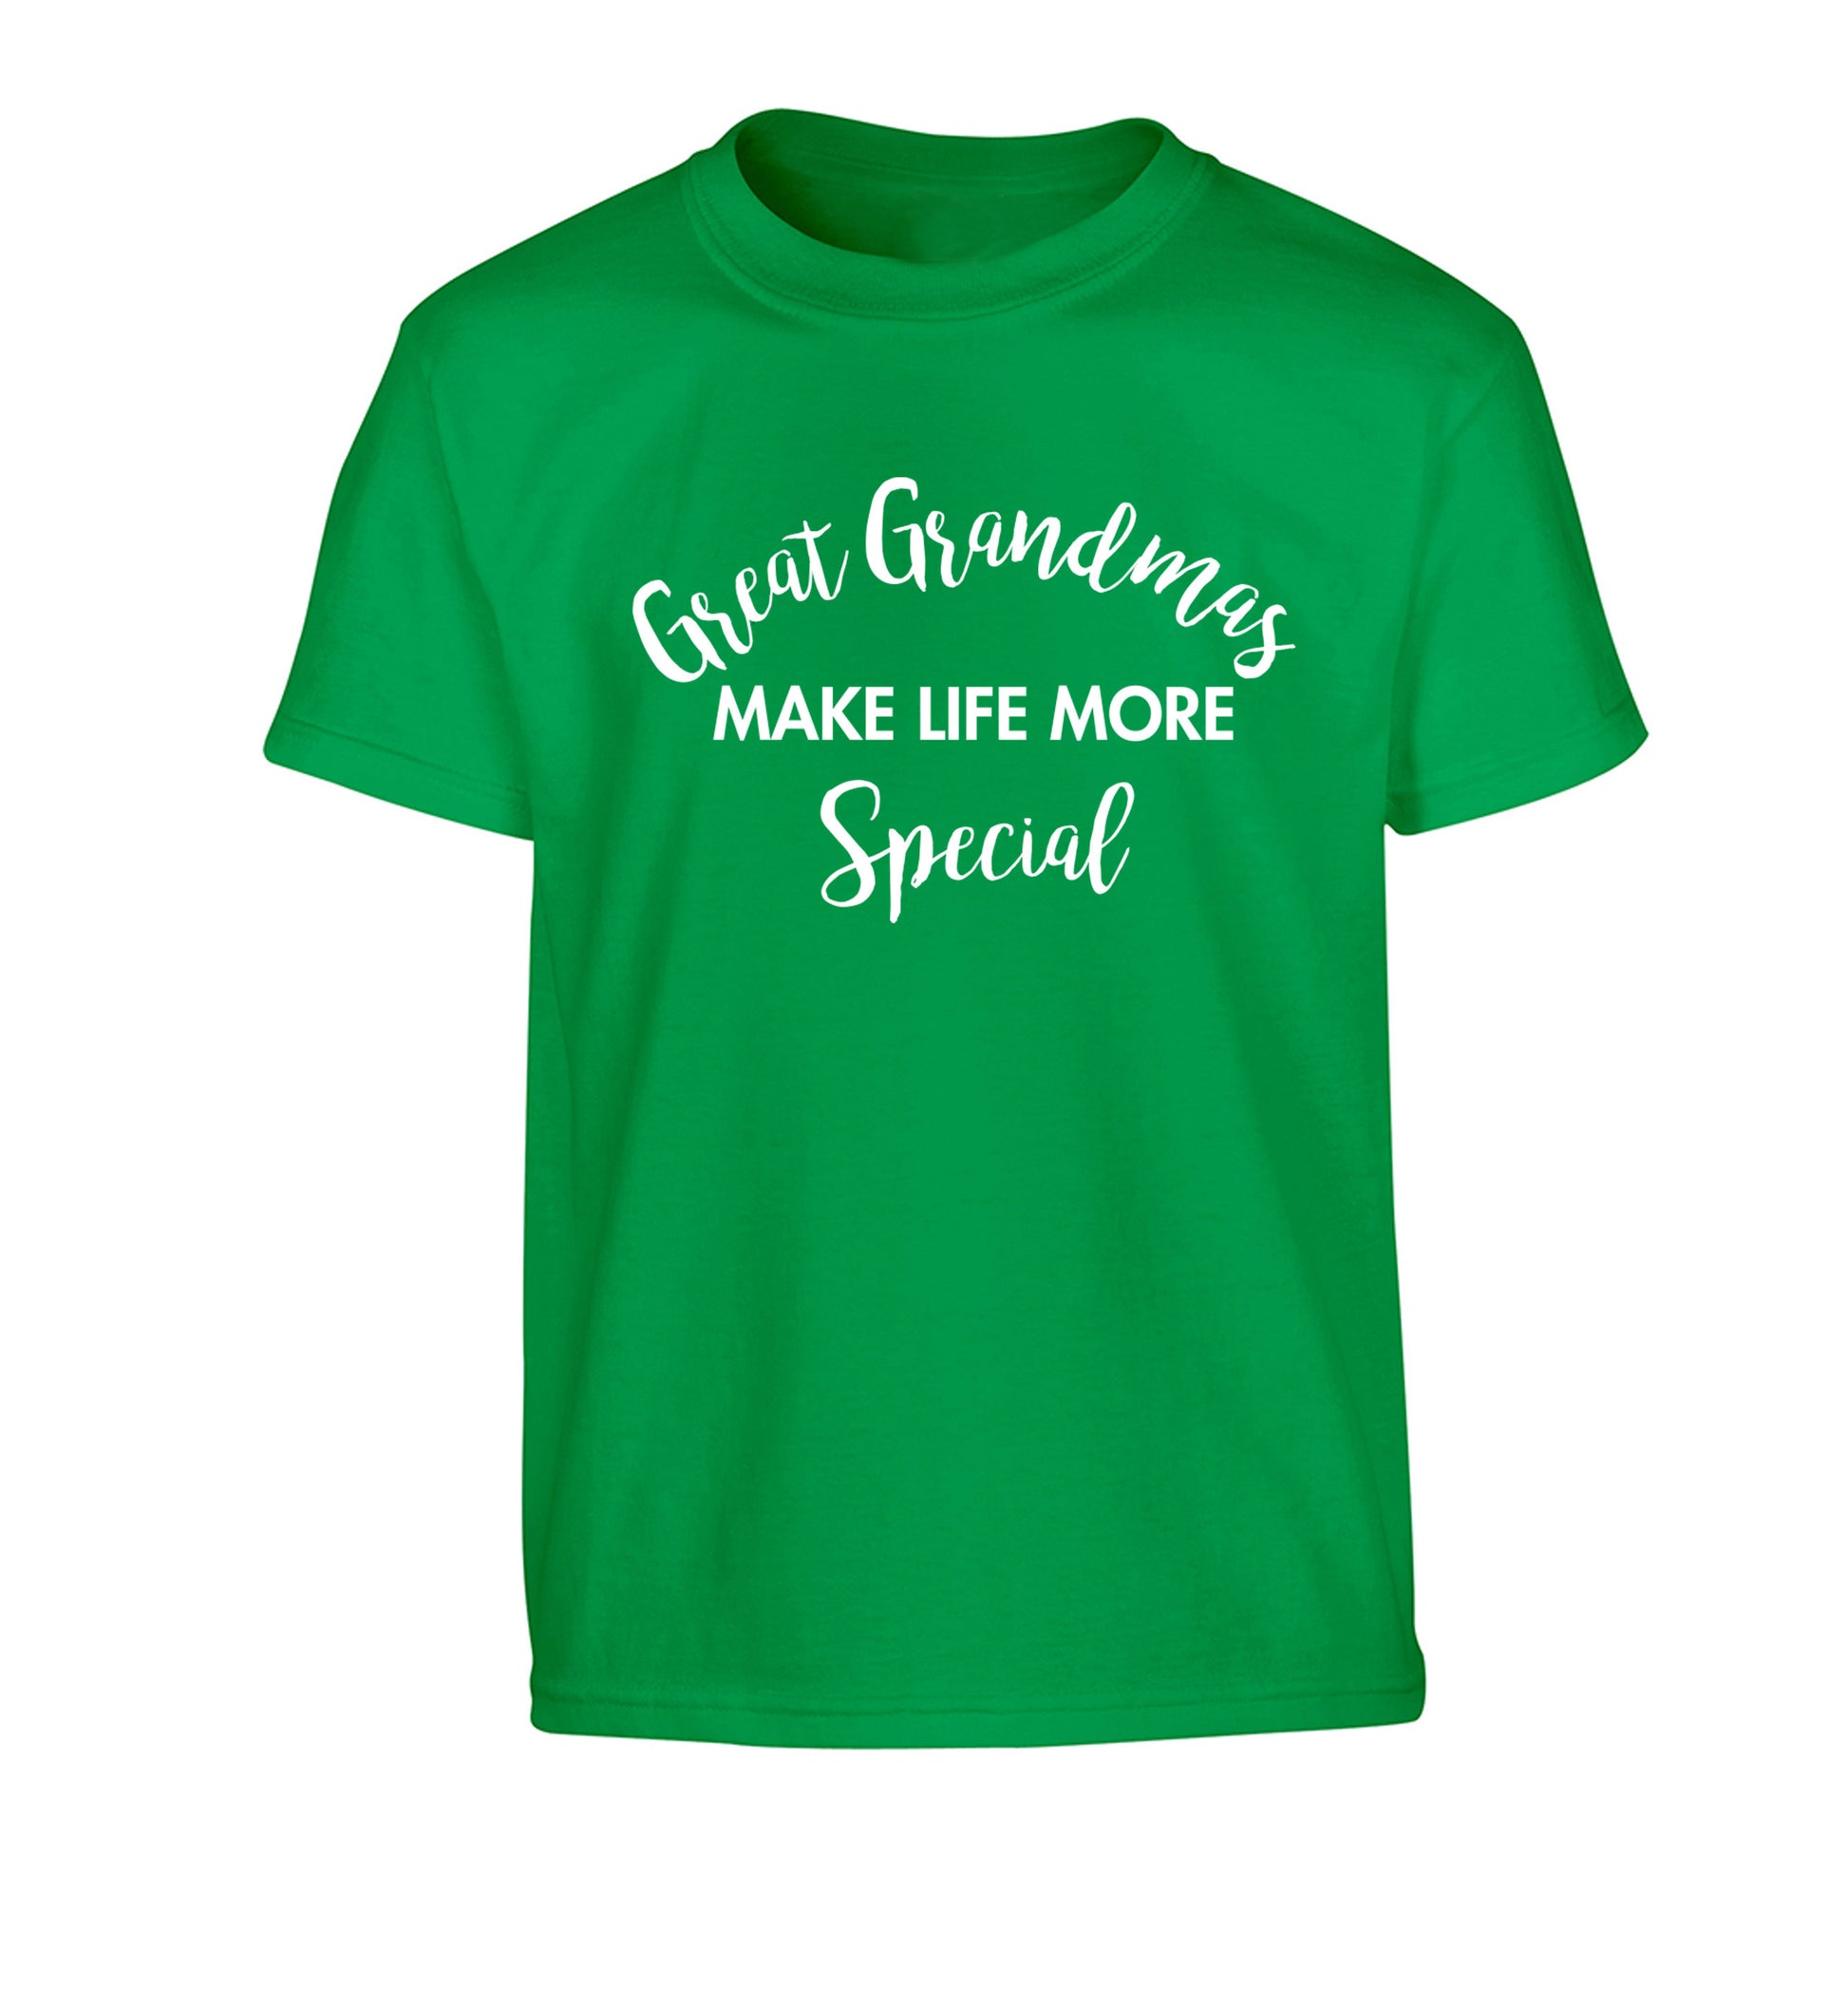 Great Grandmas make life more special Children's green Tshirt 12-14 Years